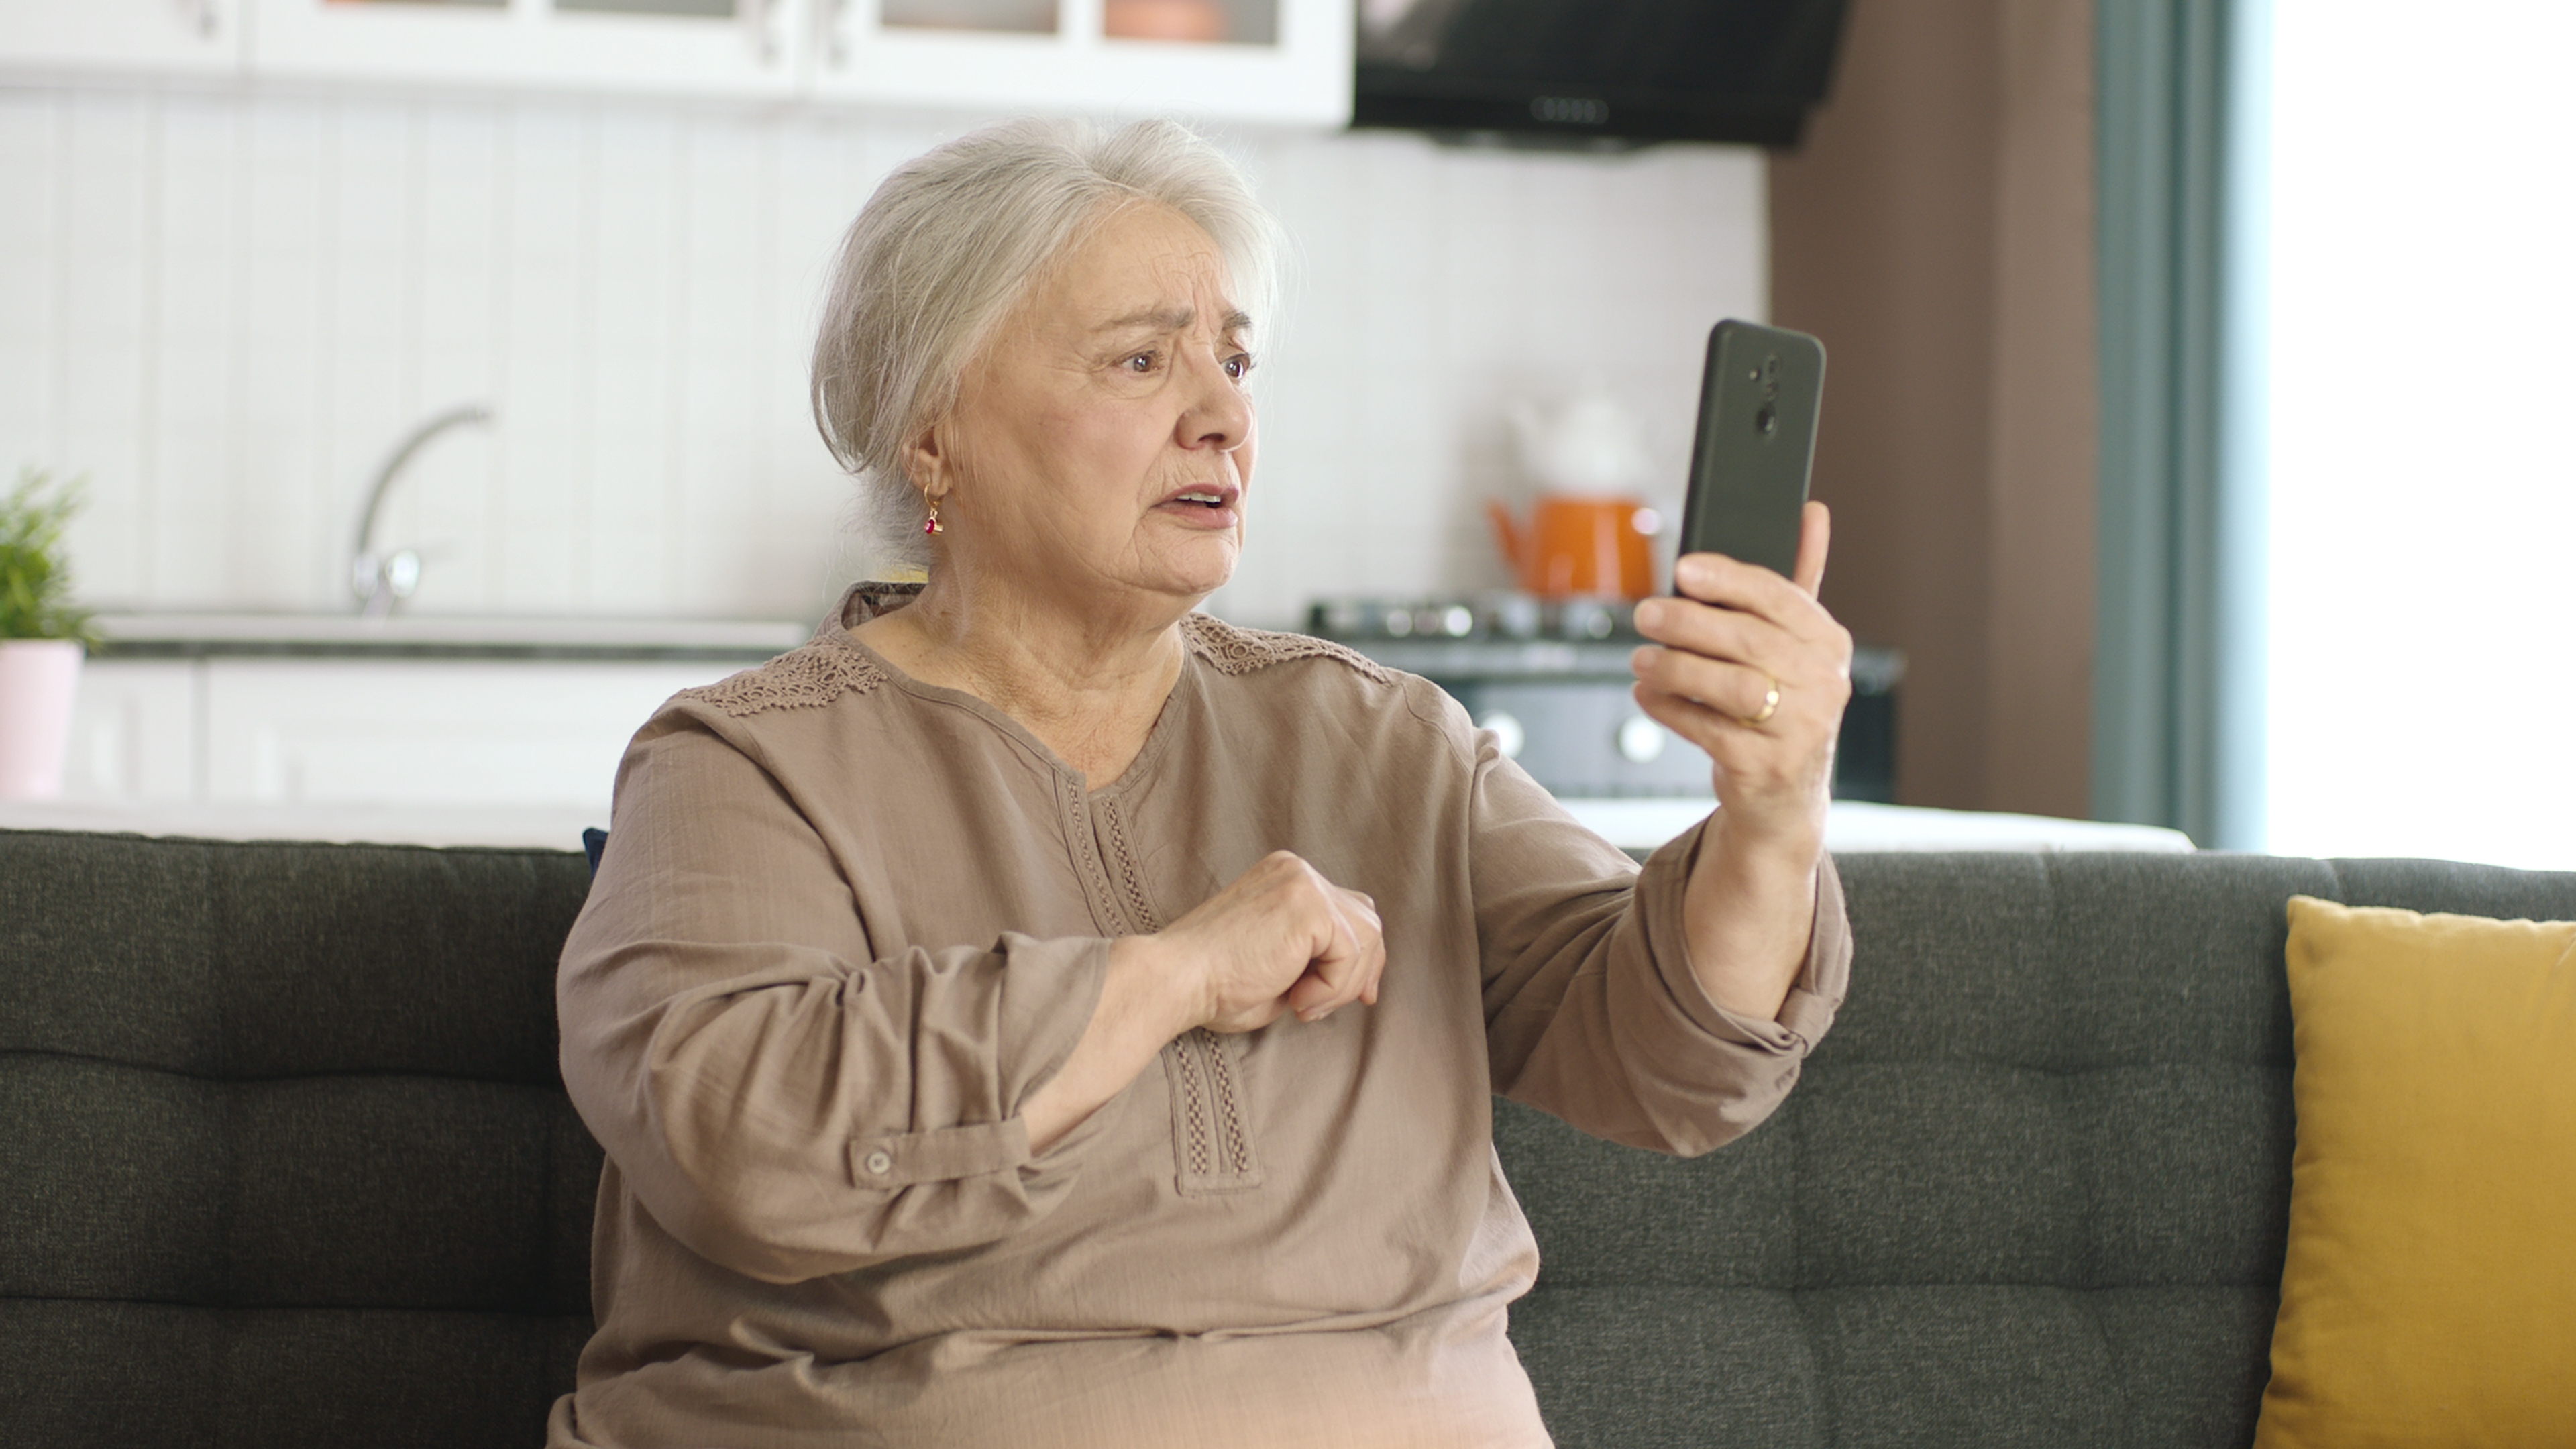 Femme âgée en colère en train de regarder son téléphone | Source : Shutterstock